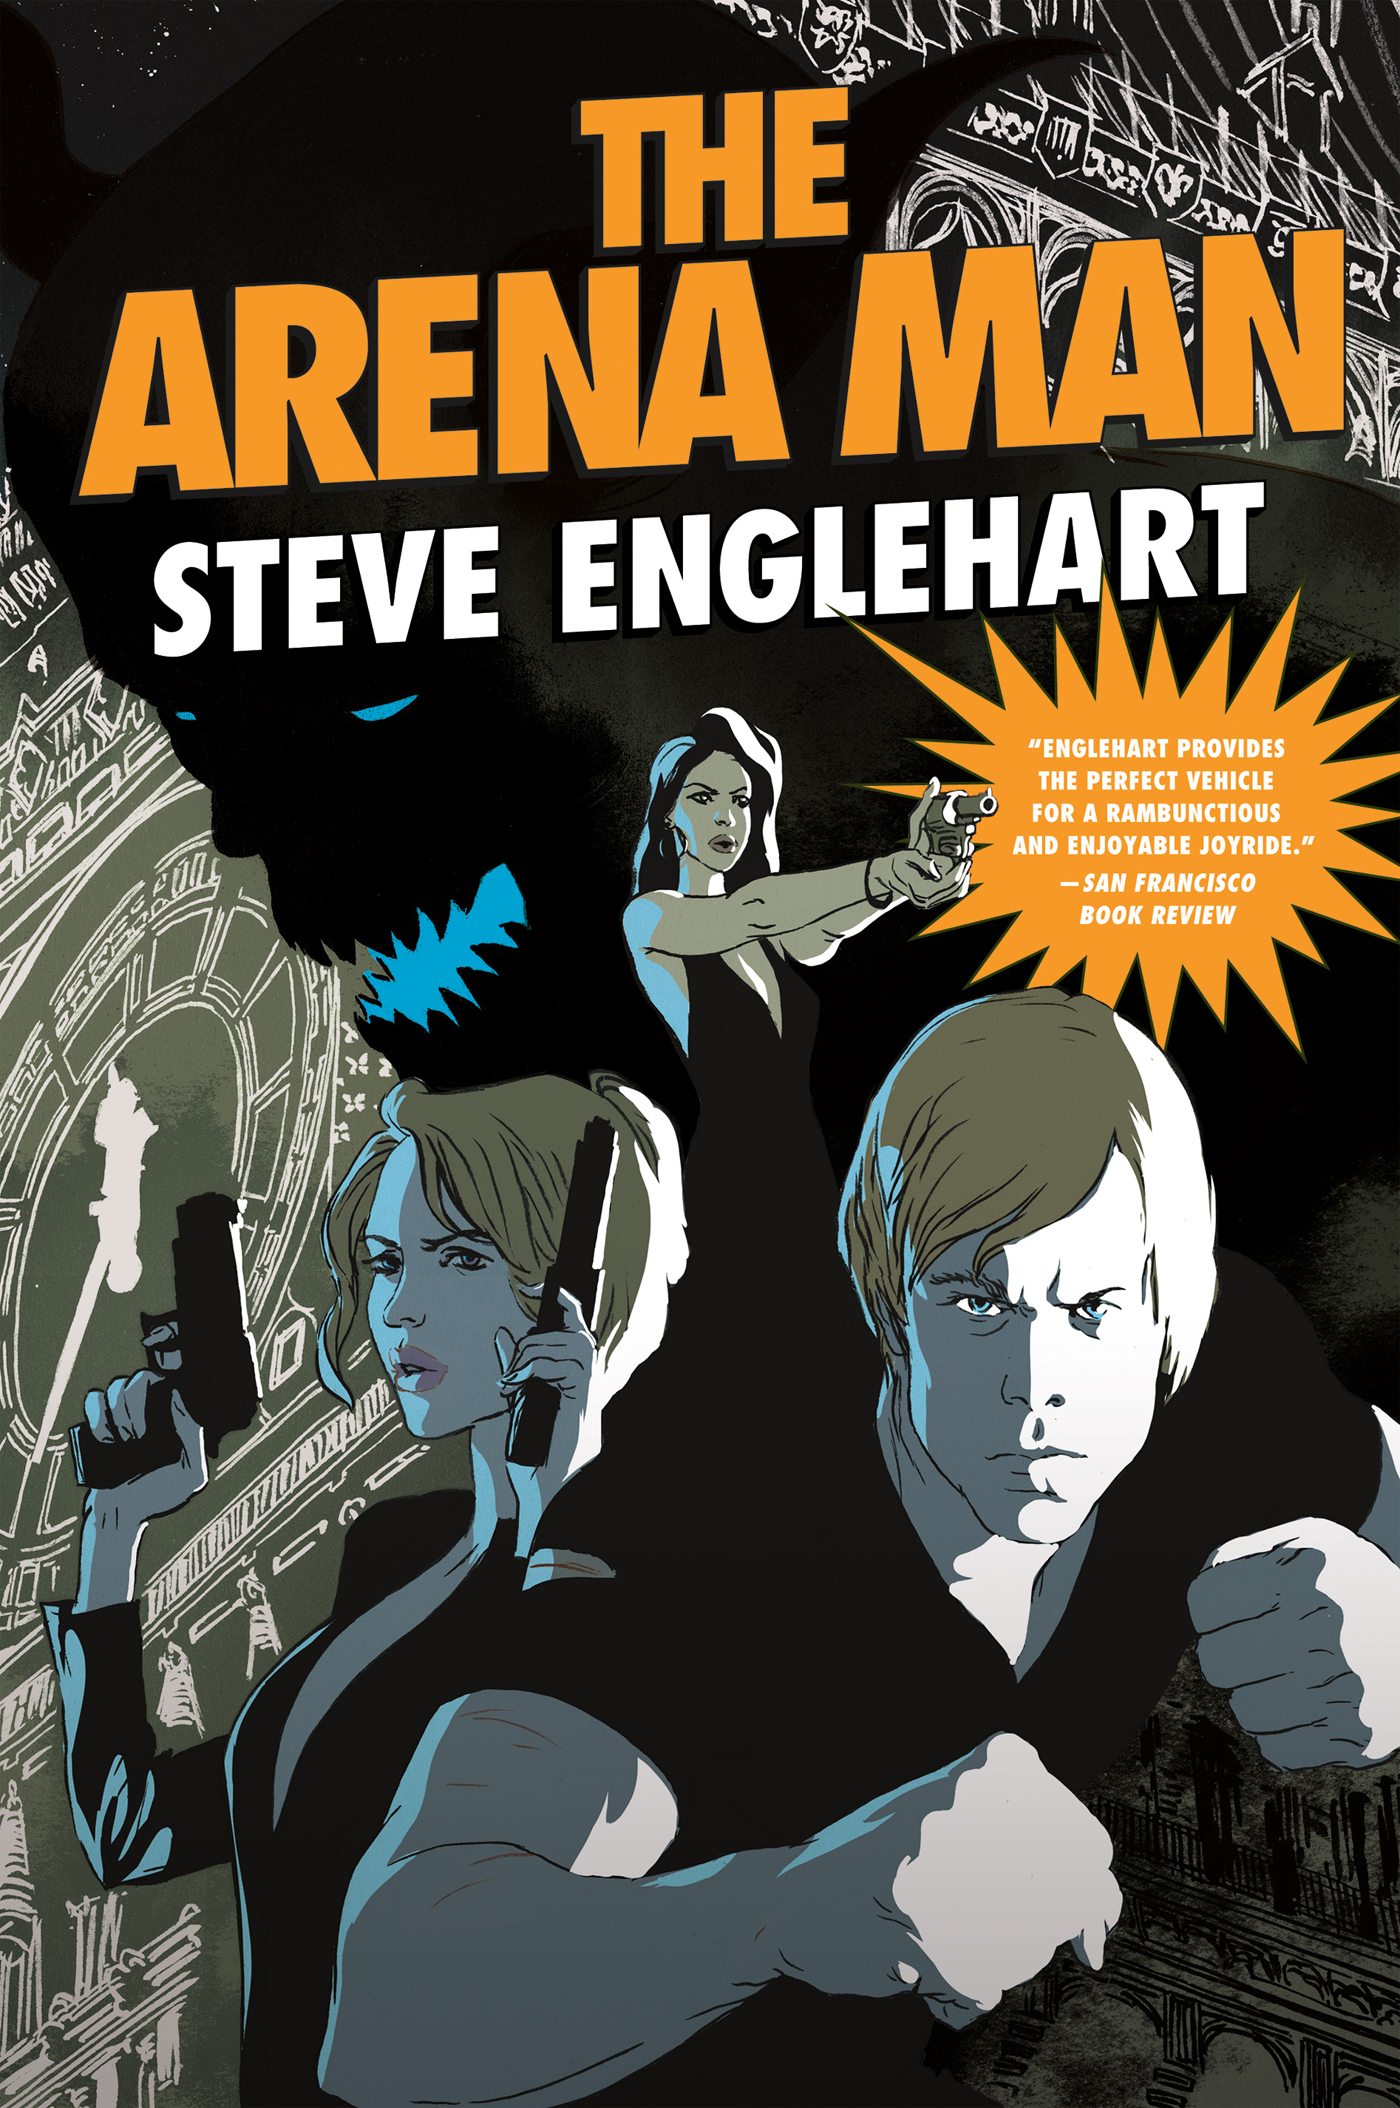 The Arena Man by Steve Englehart